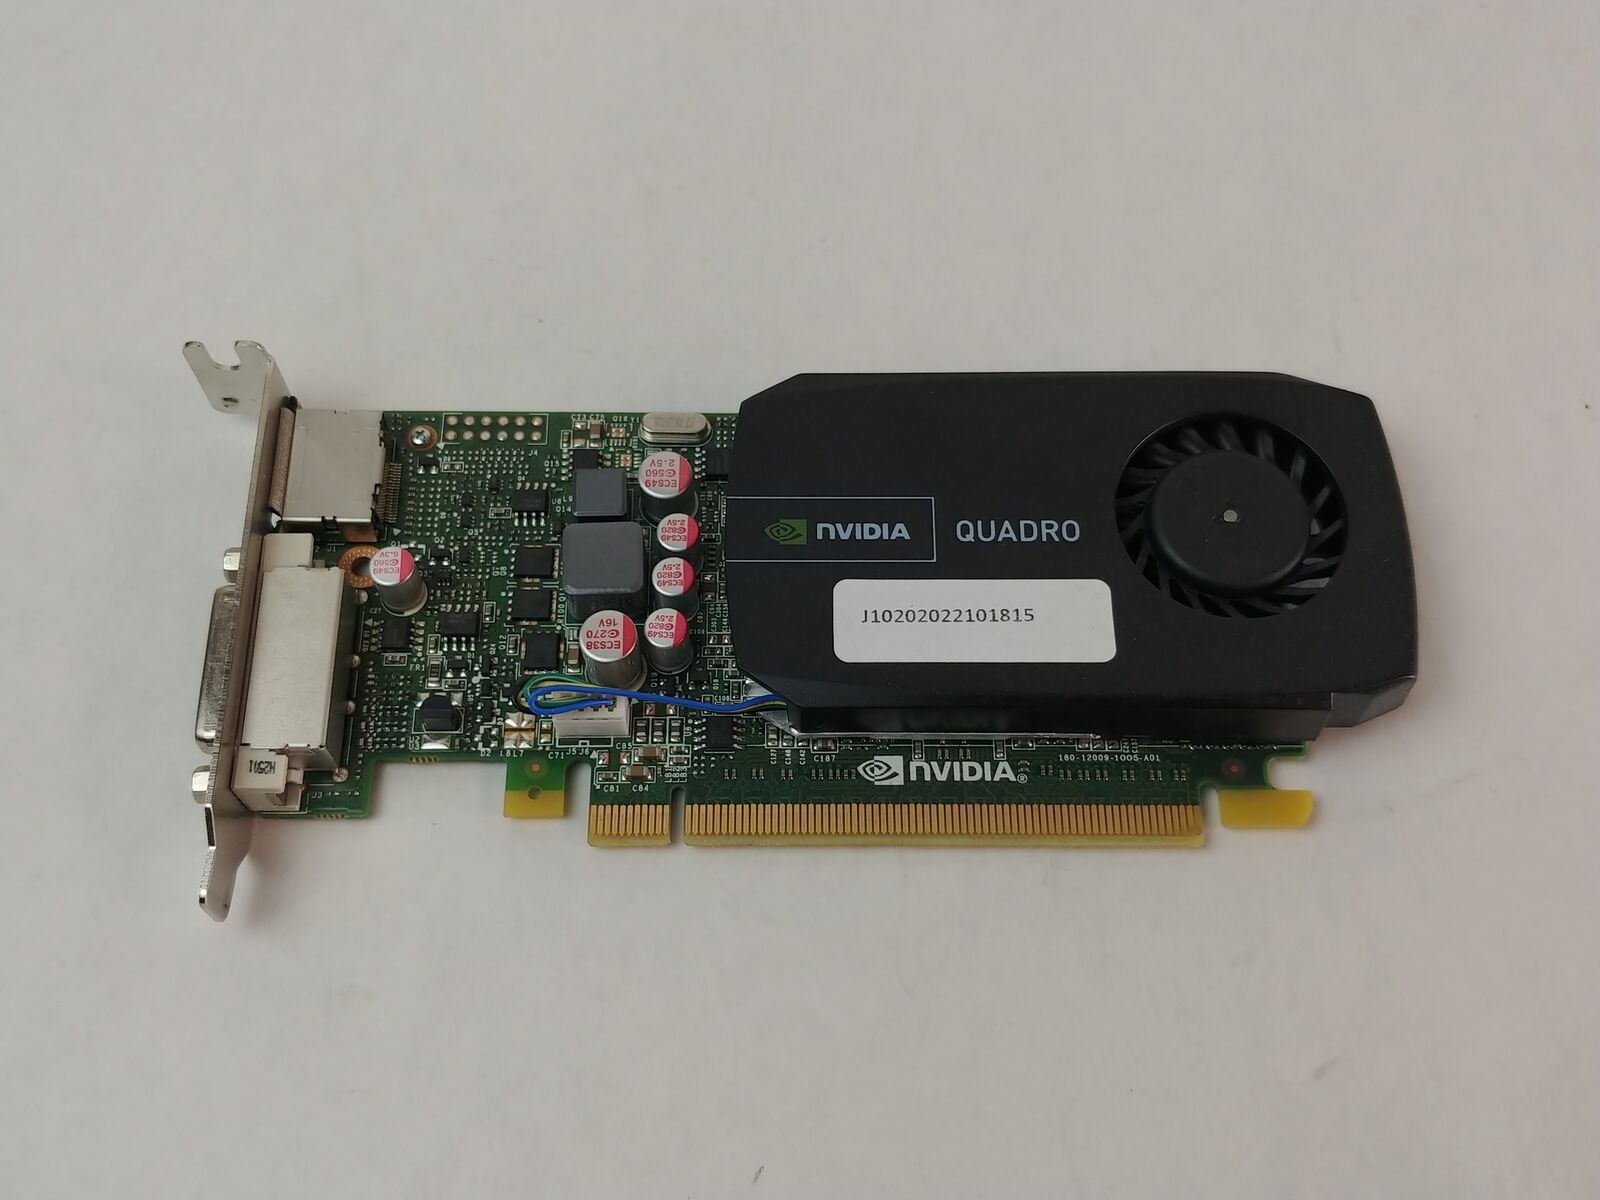 Nvidia Quadro 600 1 GB DDR3 PCI Express x16 Low Profile Video Card